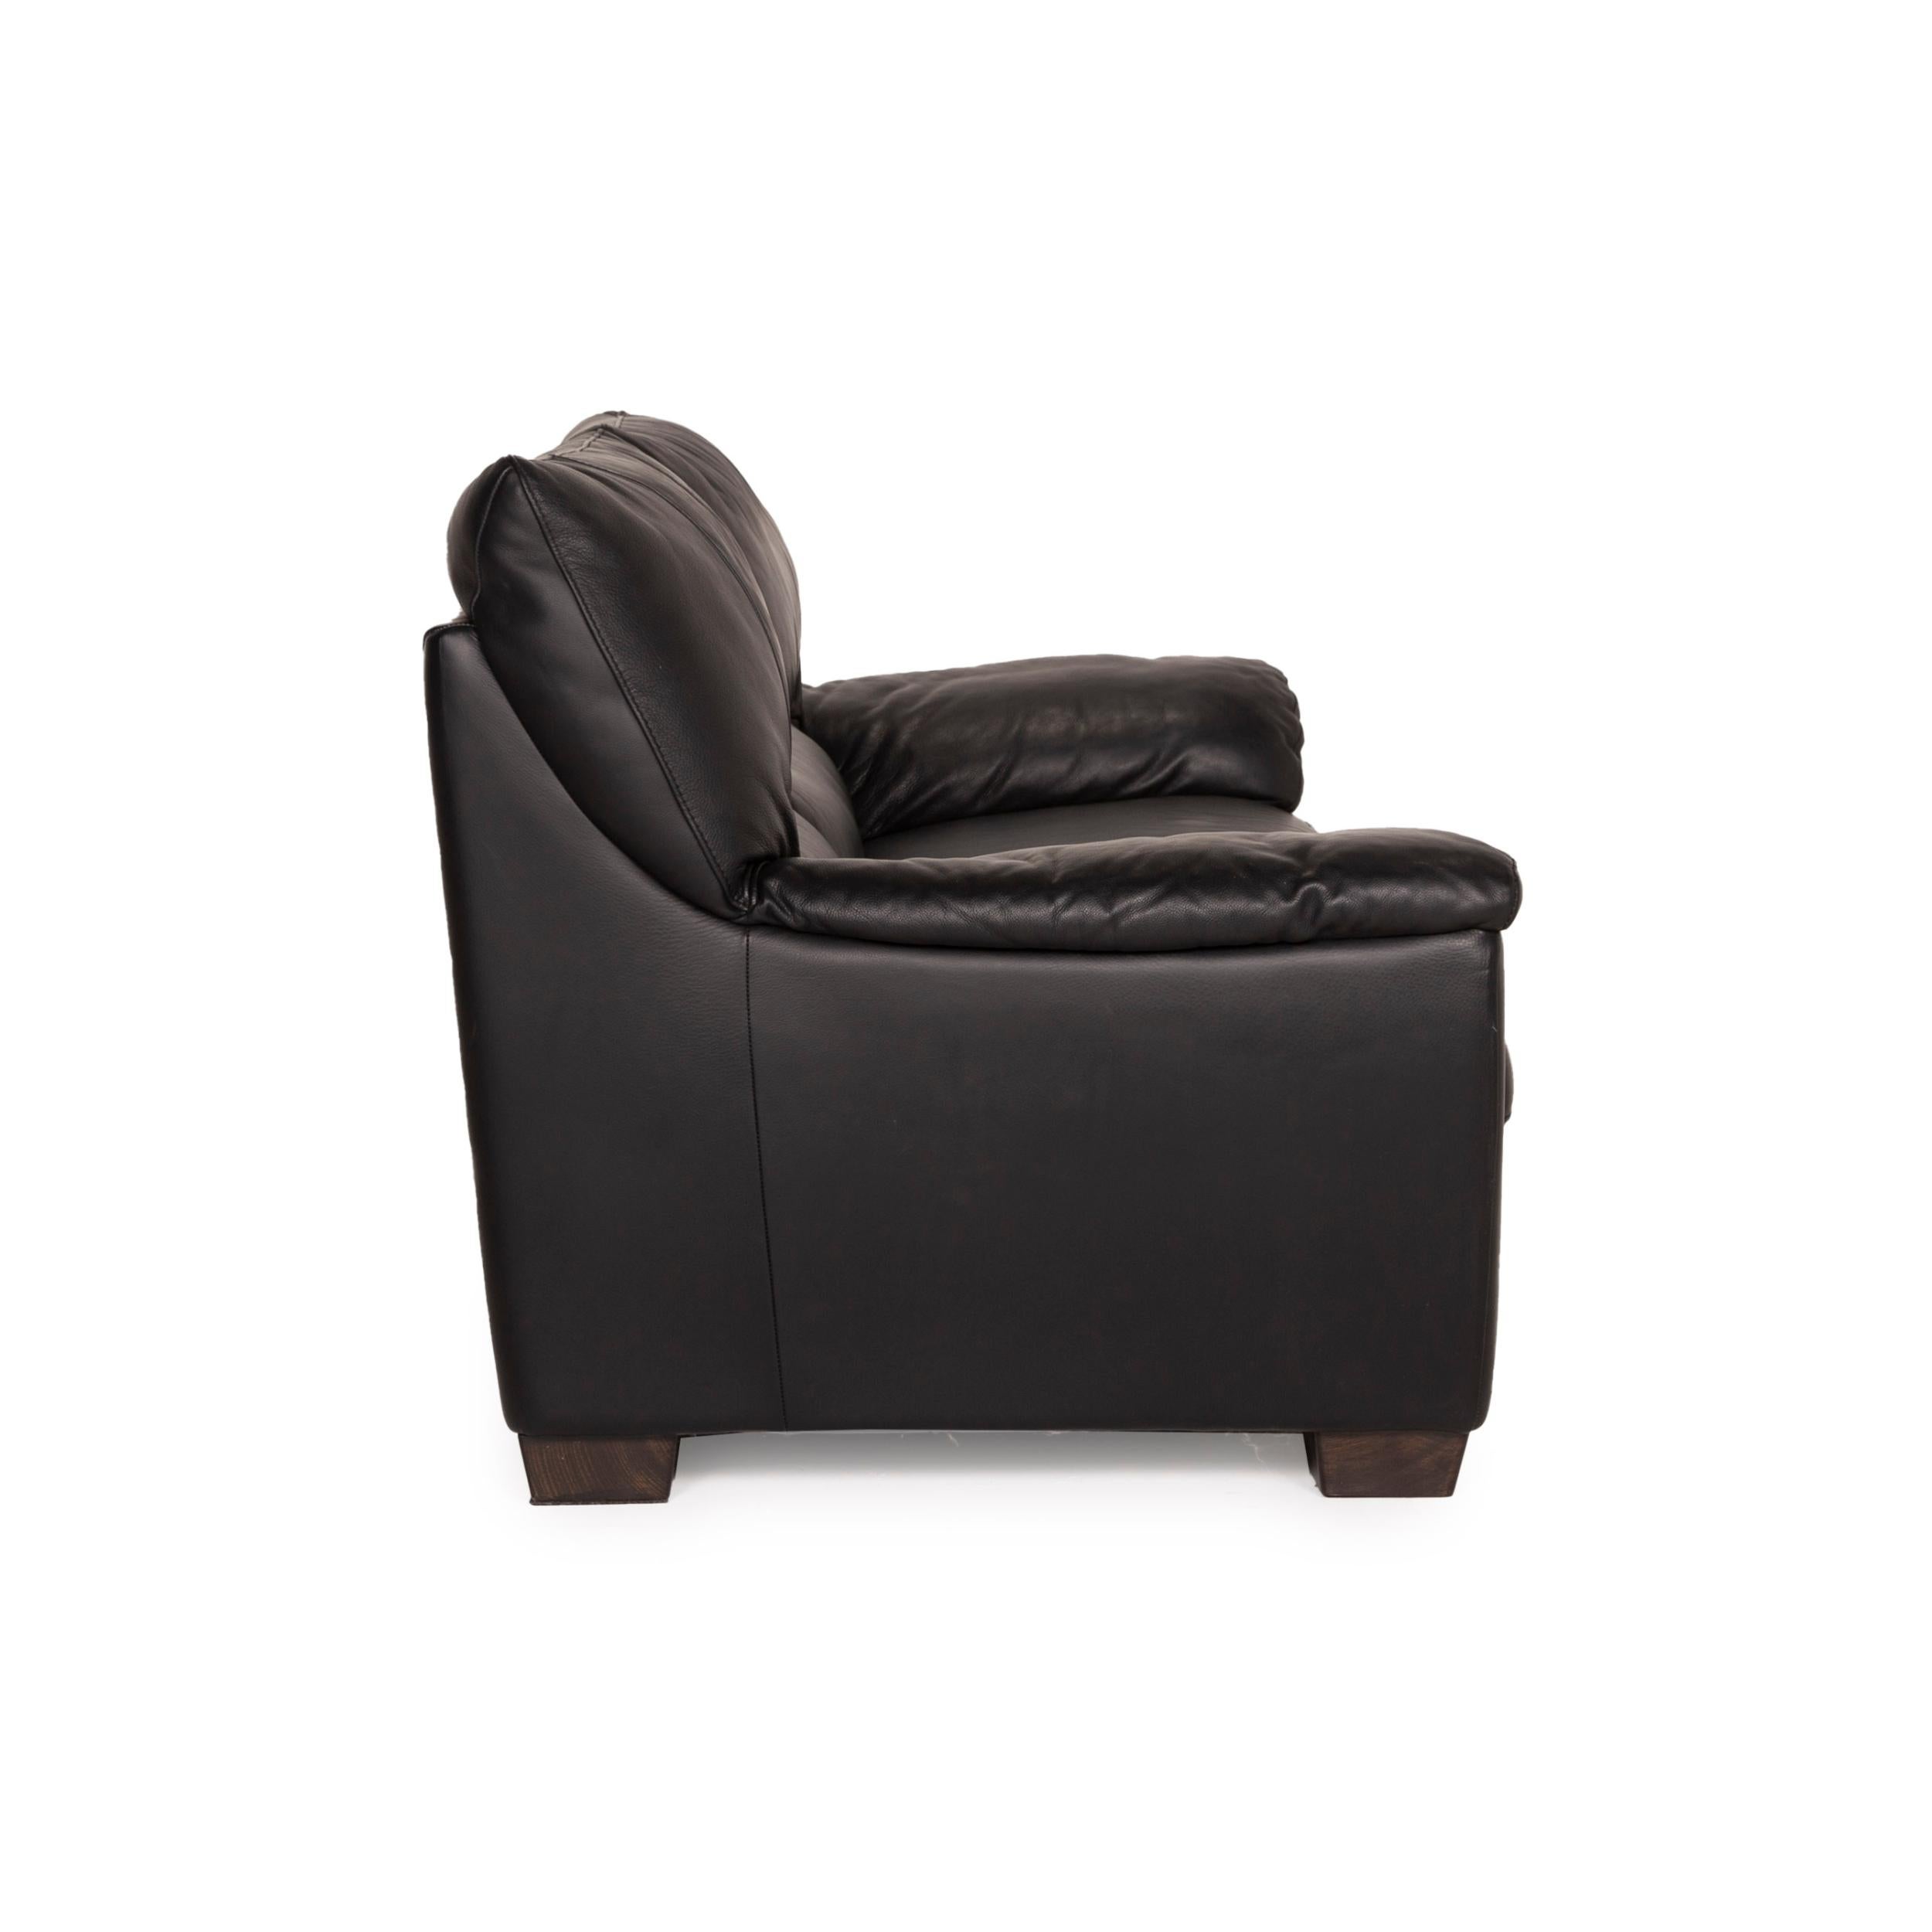 Natuzzi Two-Seater Leather Sofa Set Black 2x Two-Seater 2